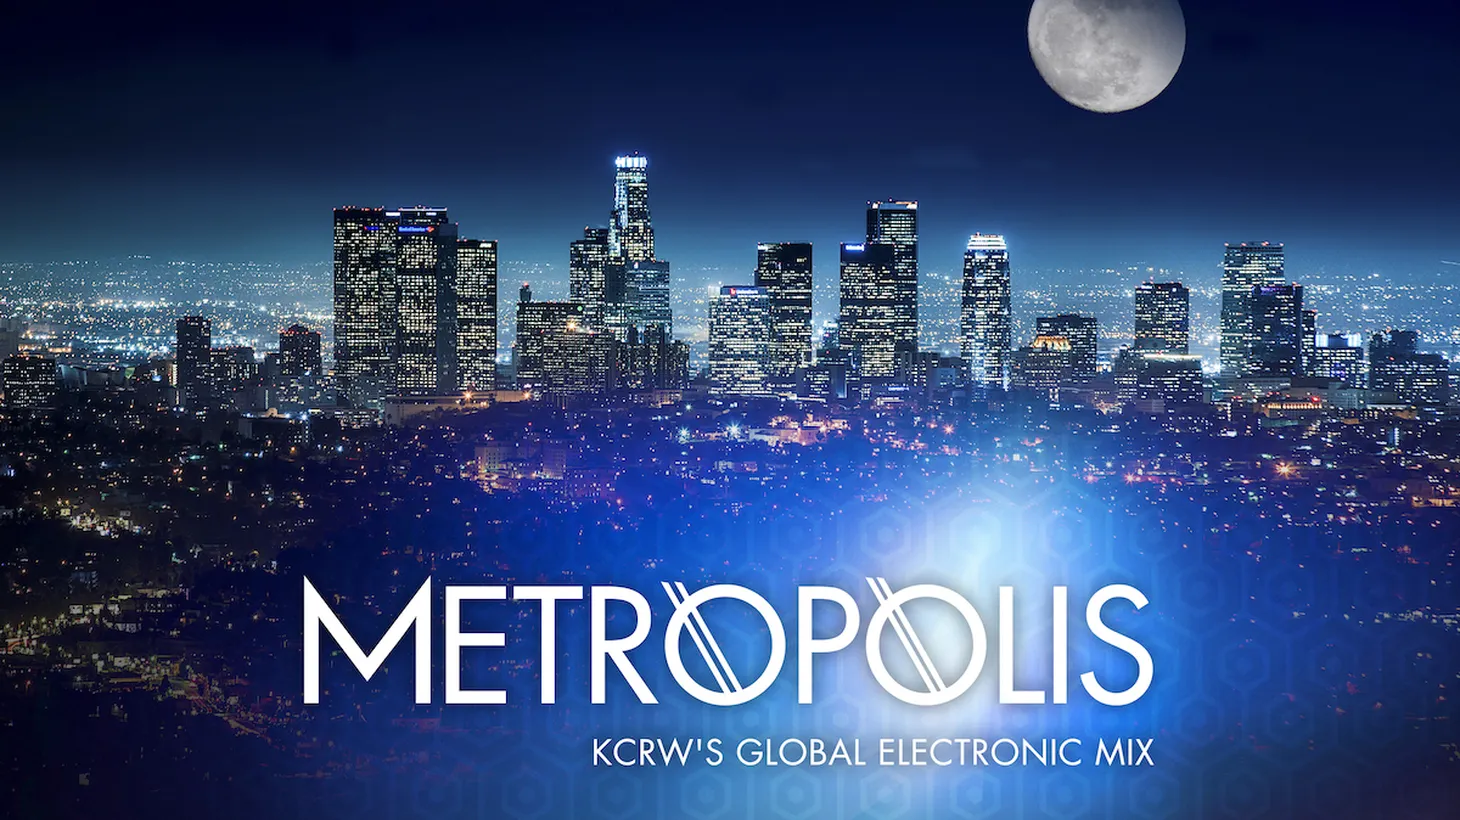 Metropolis playlist, November 13, 2021.